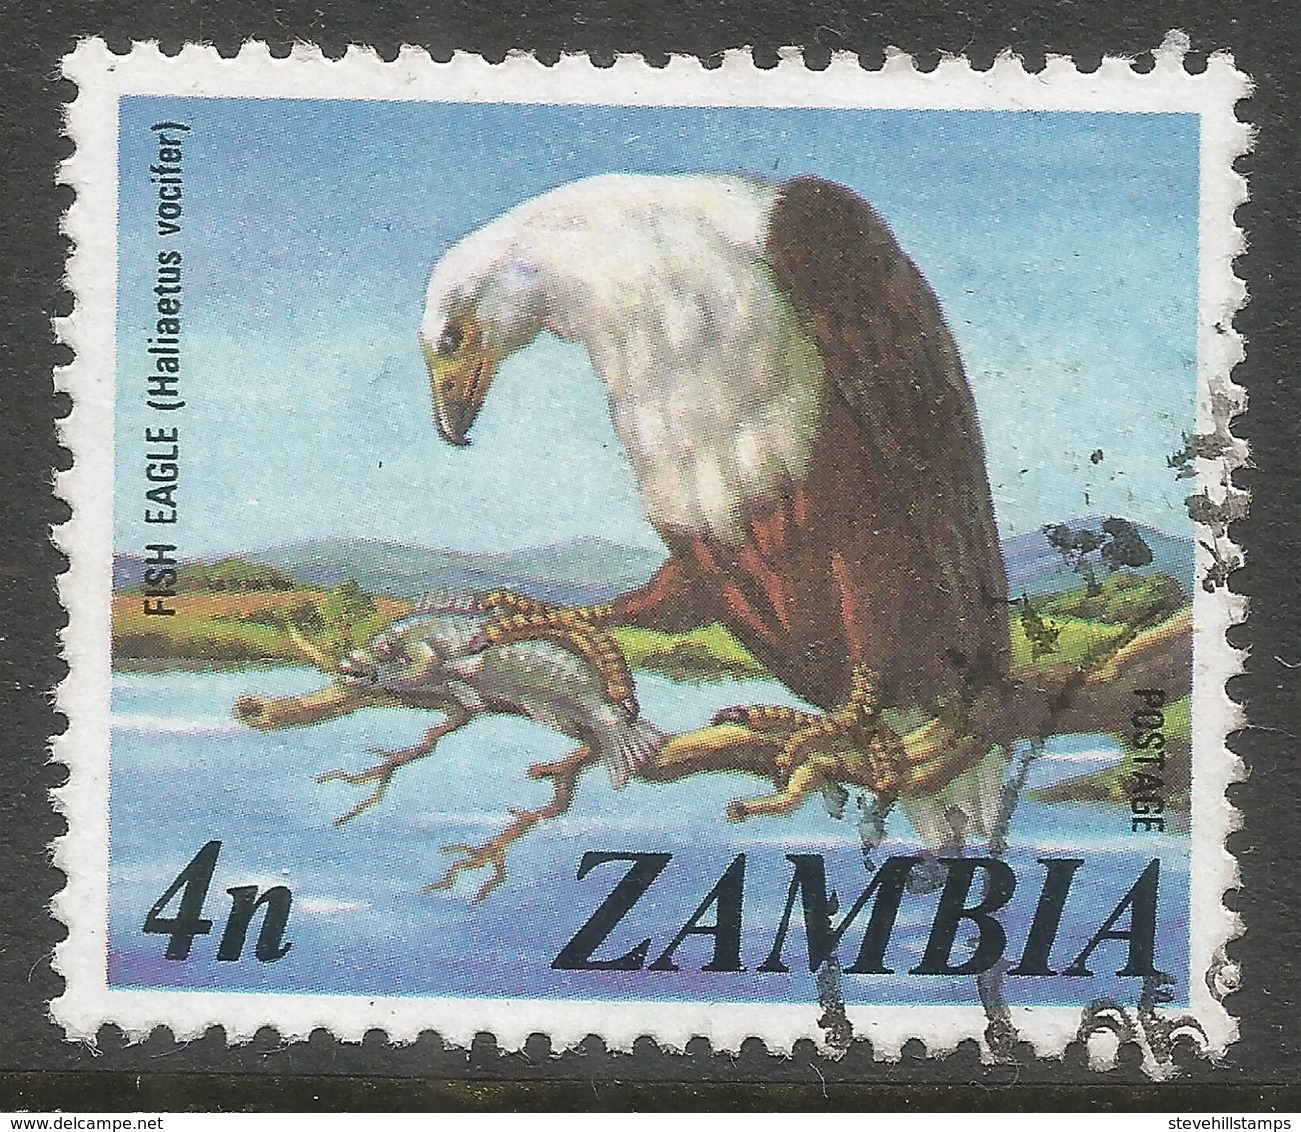 Zambia. 1975 Definitives. 4n Used. SG 229 - Zambia (1965-...)